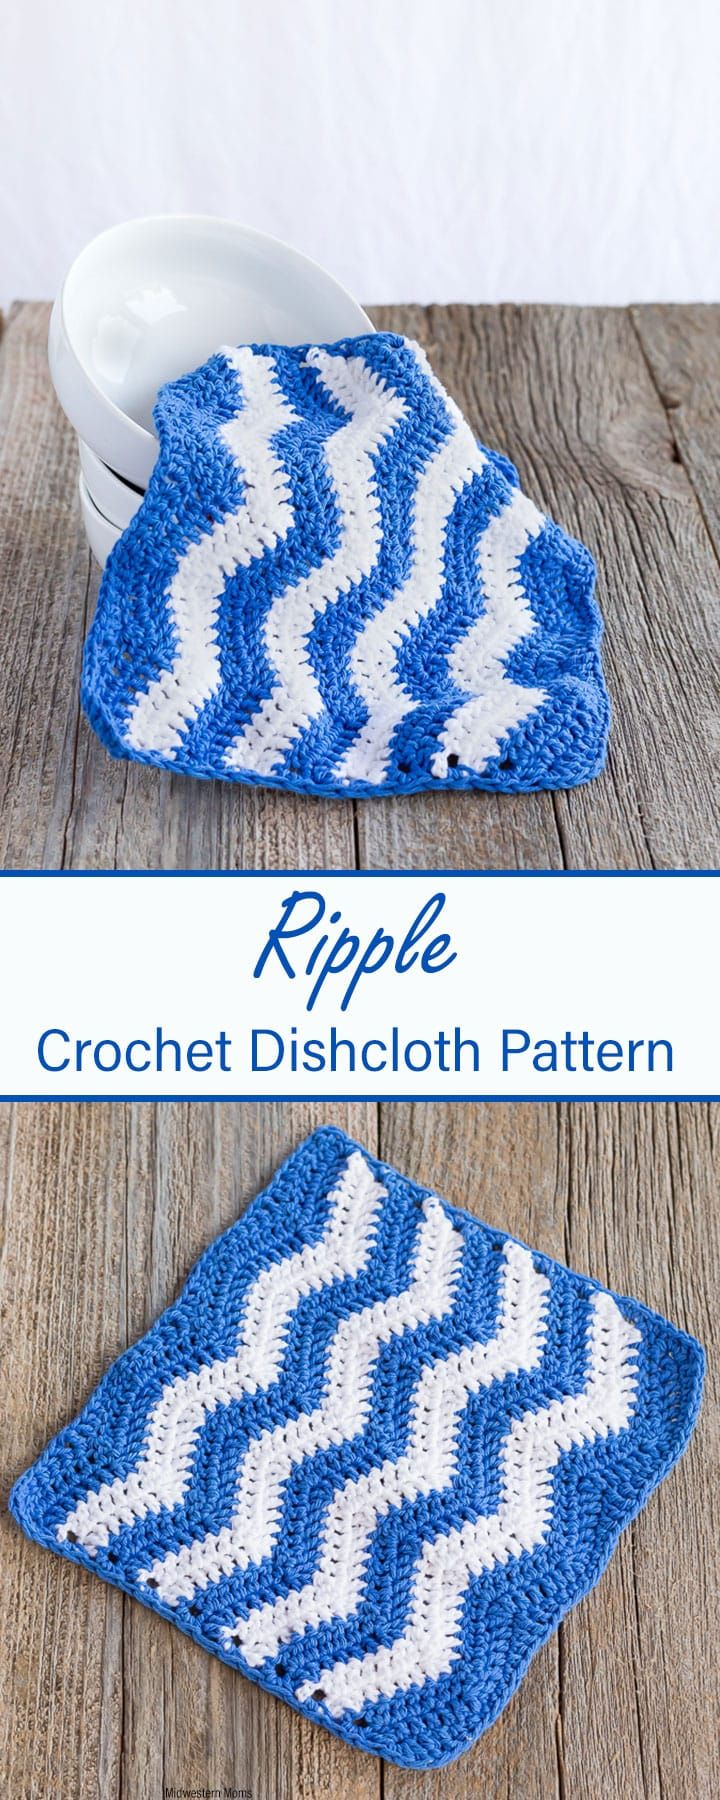 Crochet Dishcloth Pattern Ripple Crochet Dishcloth Pattern Crochet Patterns Crochet